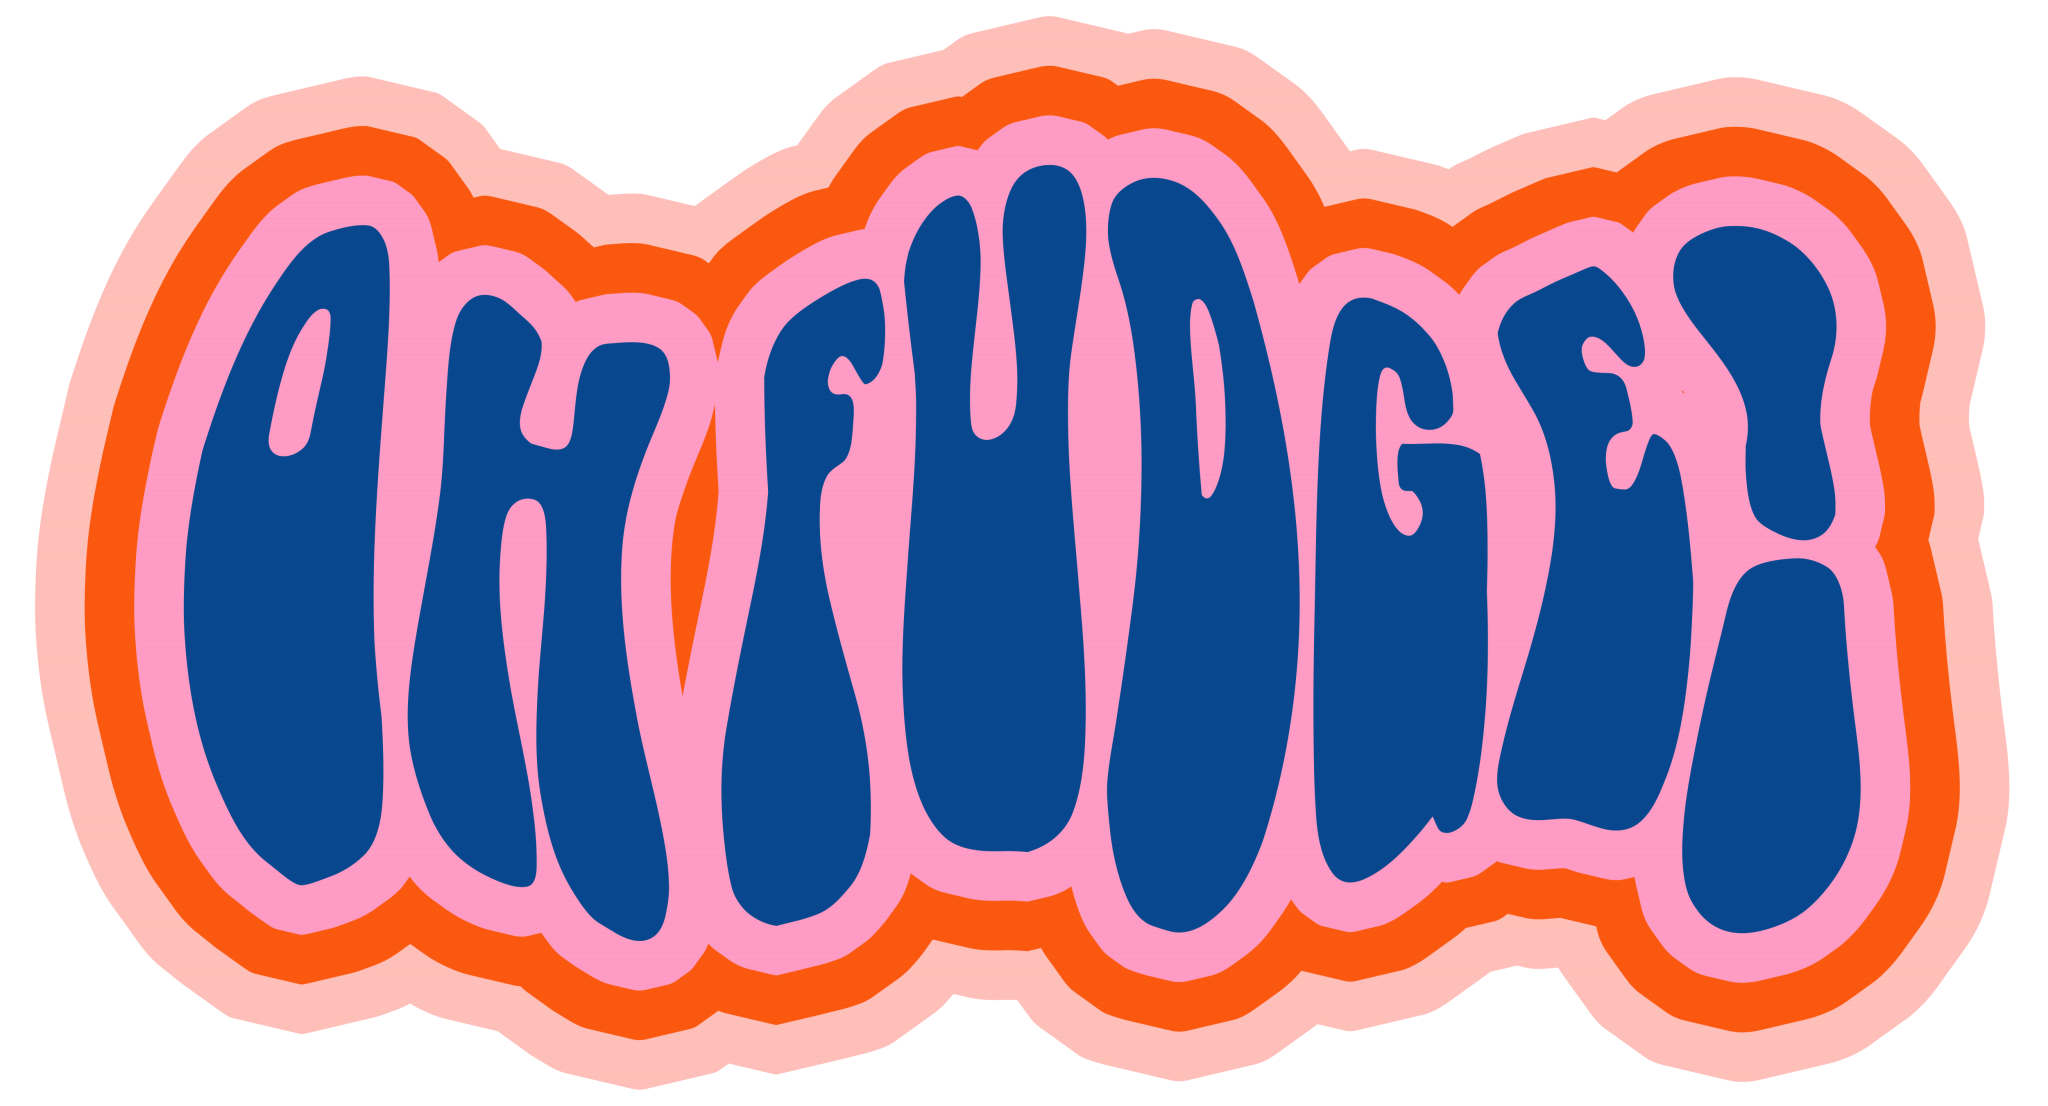 Oh fudge Logo